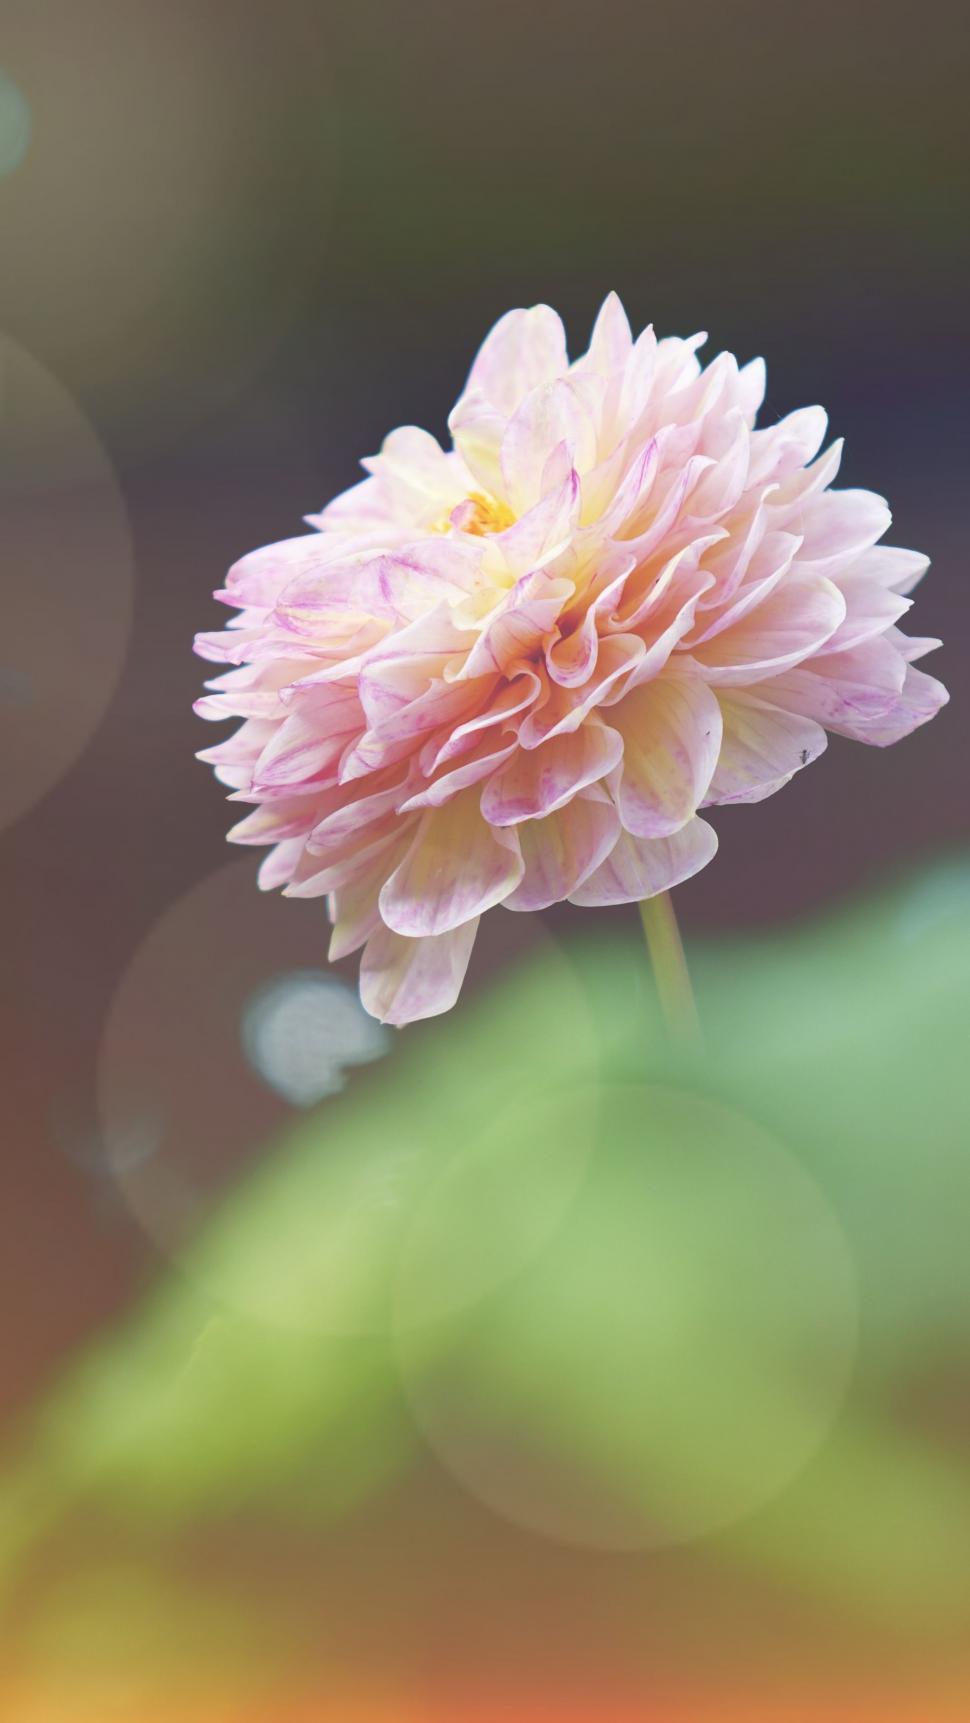 Free Image of Pink Flower Resting on Green Leaf 